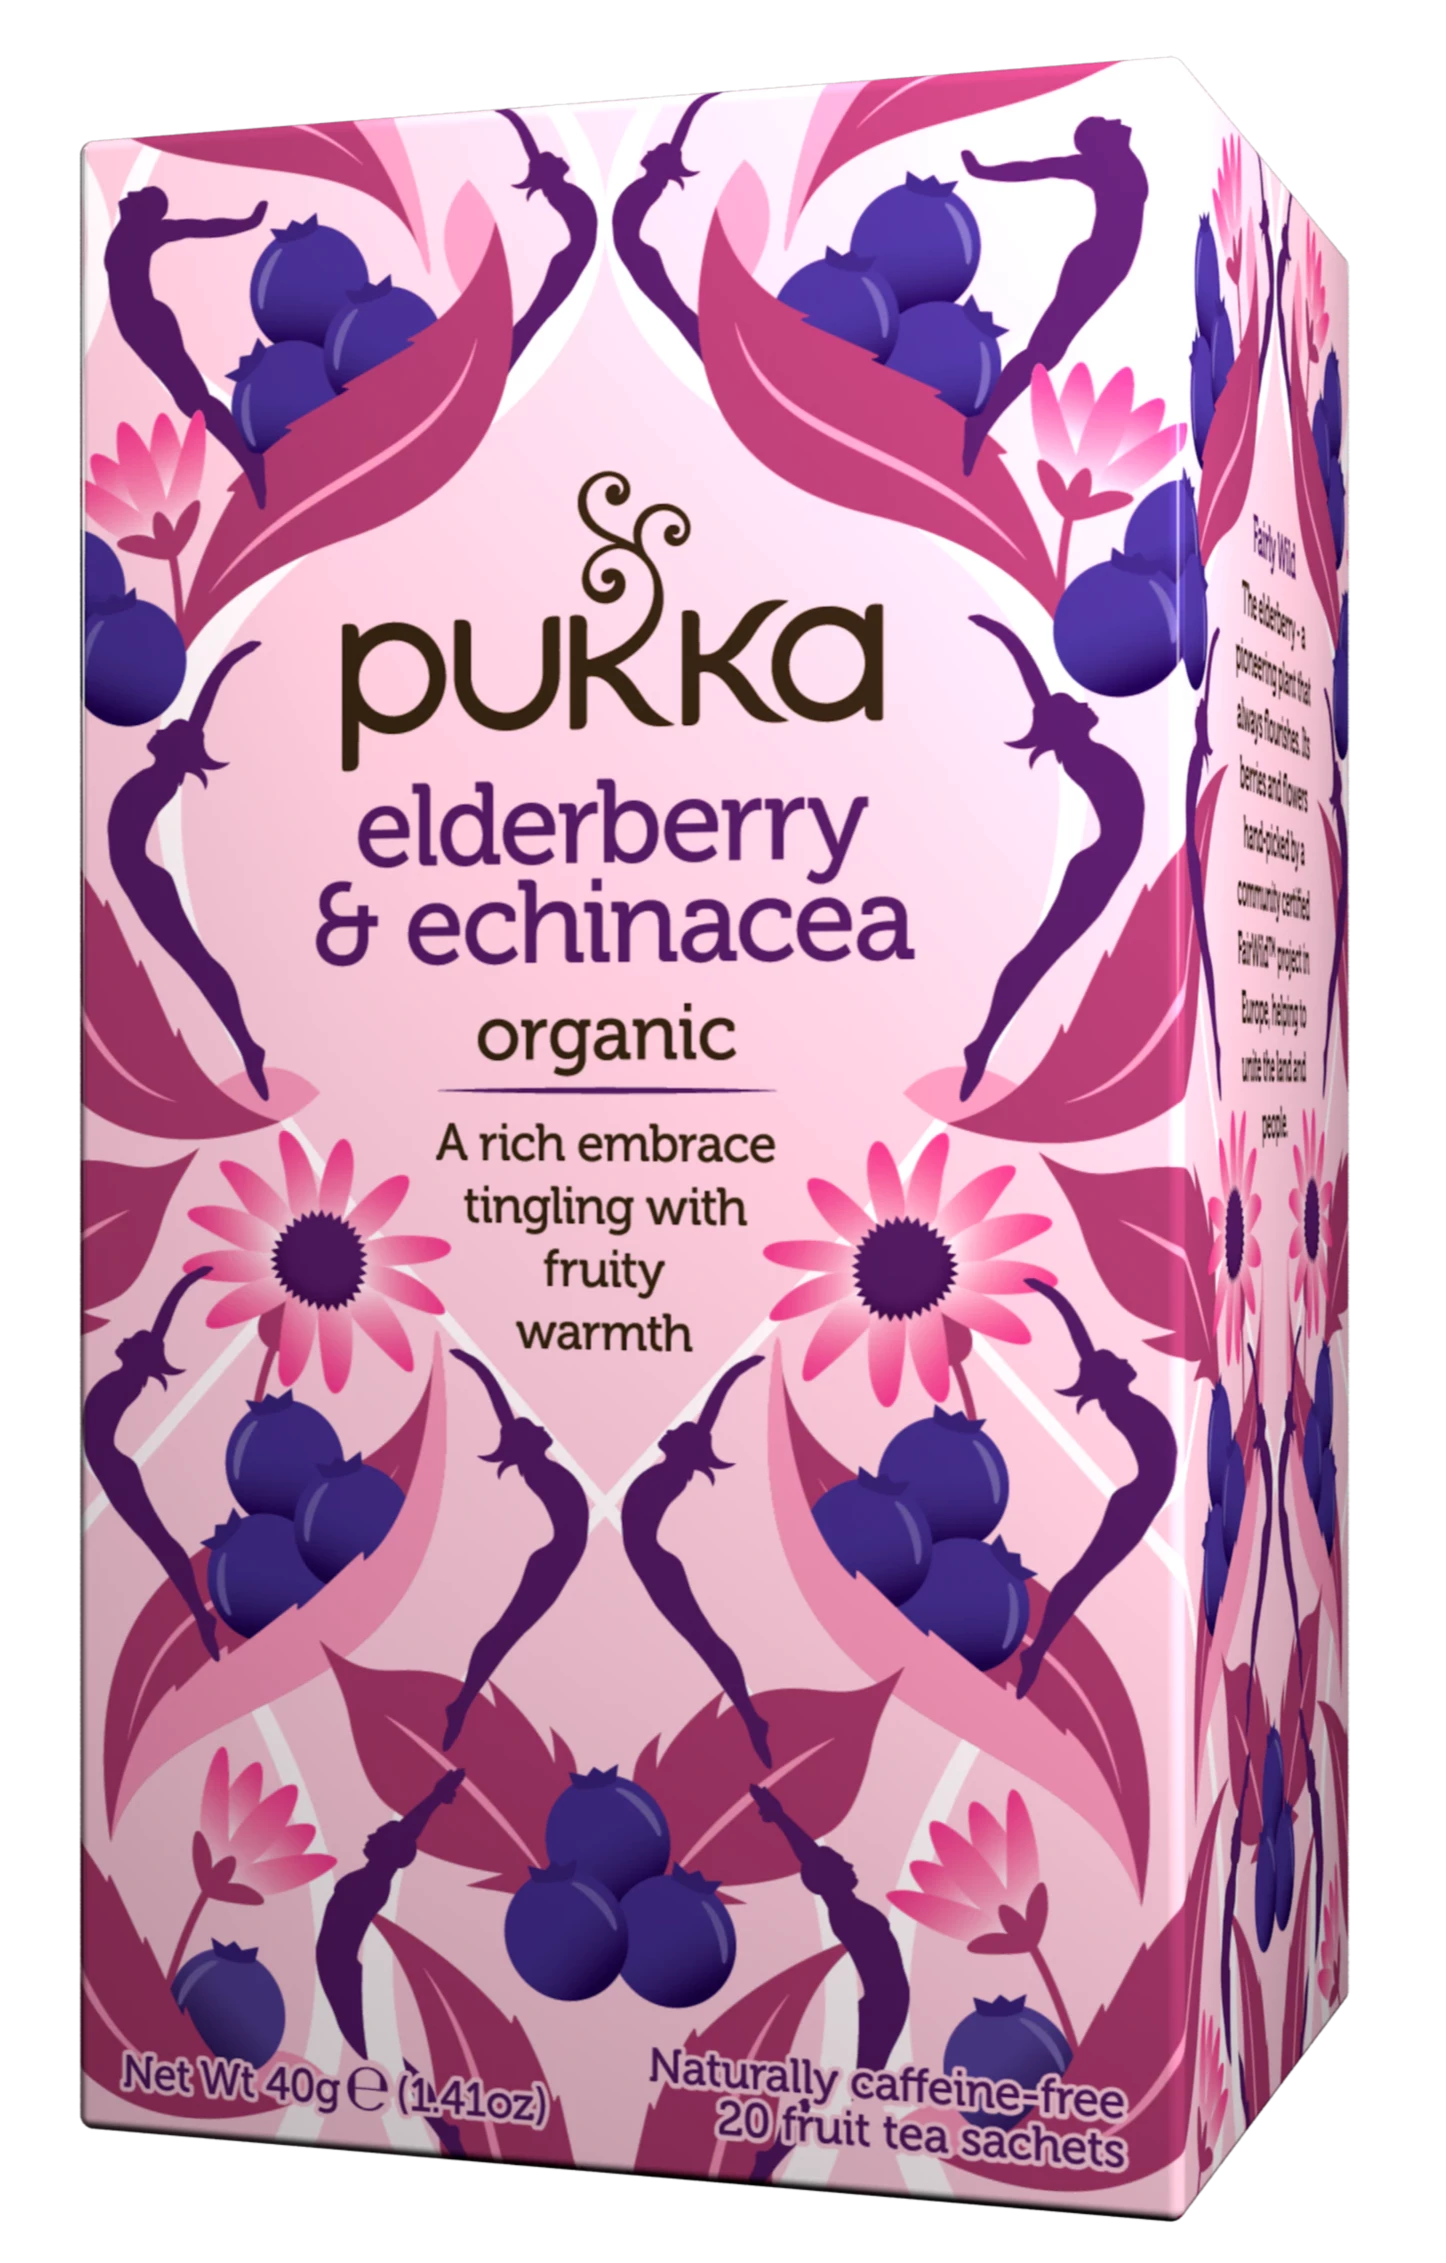 Elderberry & Echinacea by Pukka